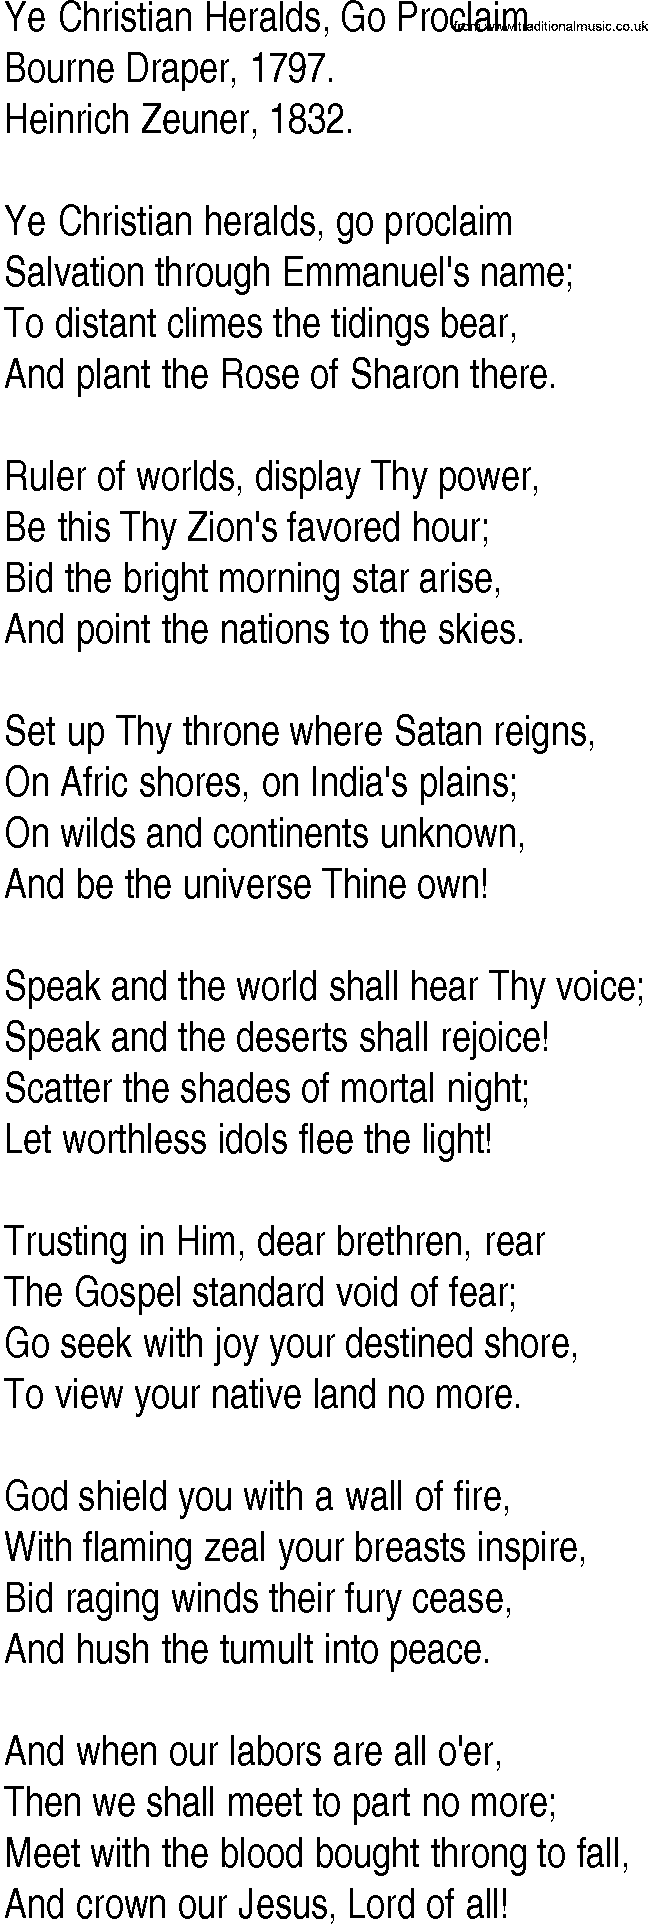 Hymn and Gospel Song: Ye Christian Heralds, Go Proclaim by Bourne Draper lyrics